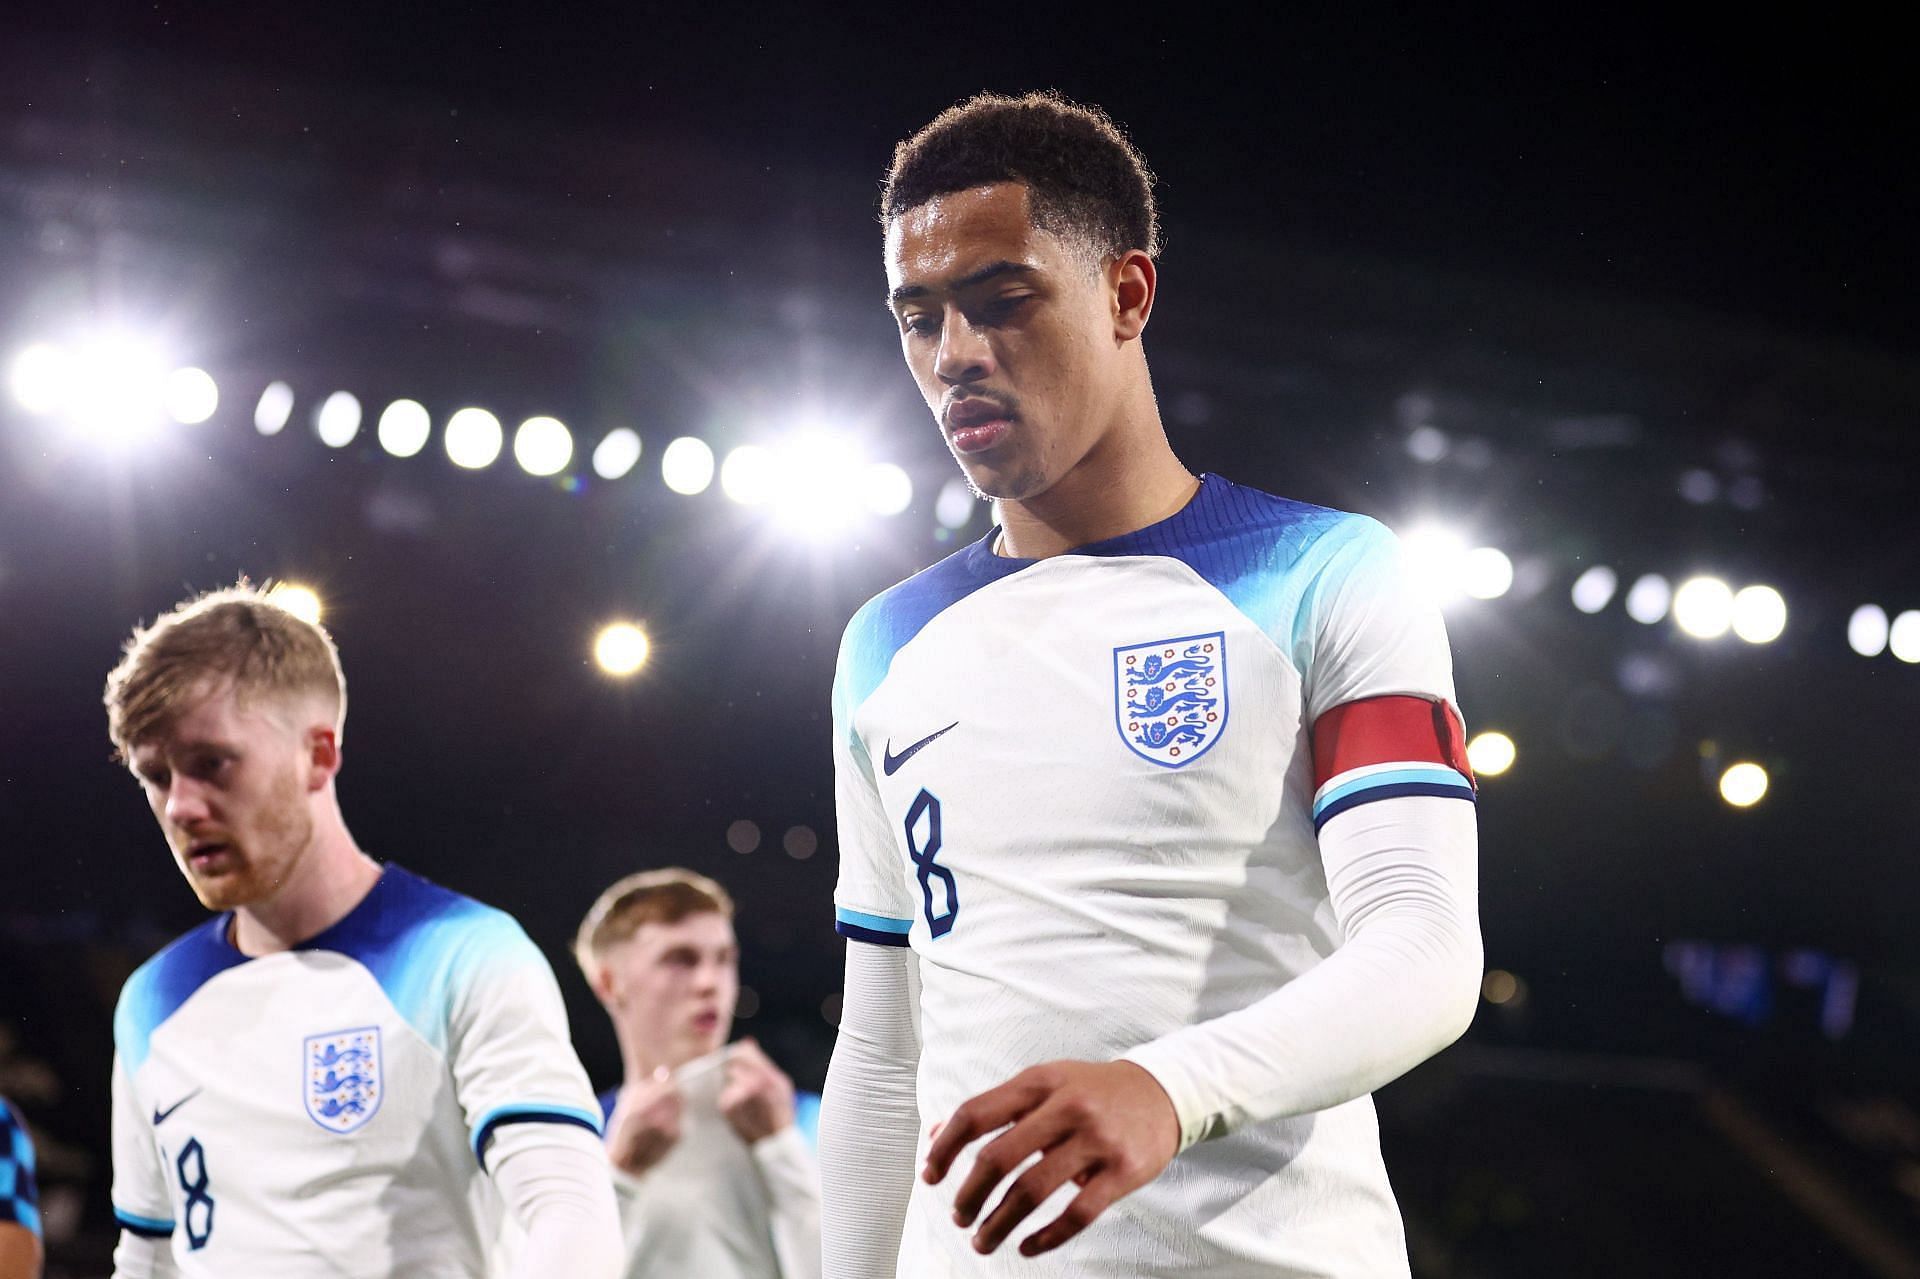 England U21 will face Portugal U21 on Sunday